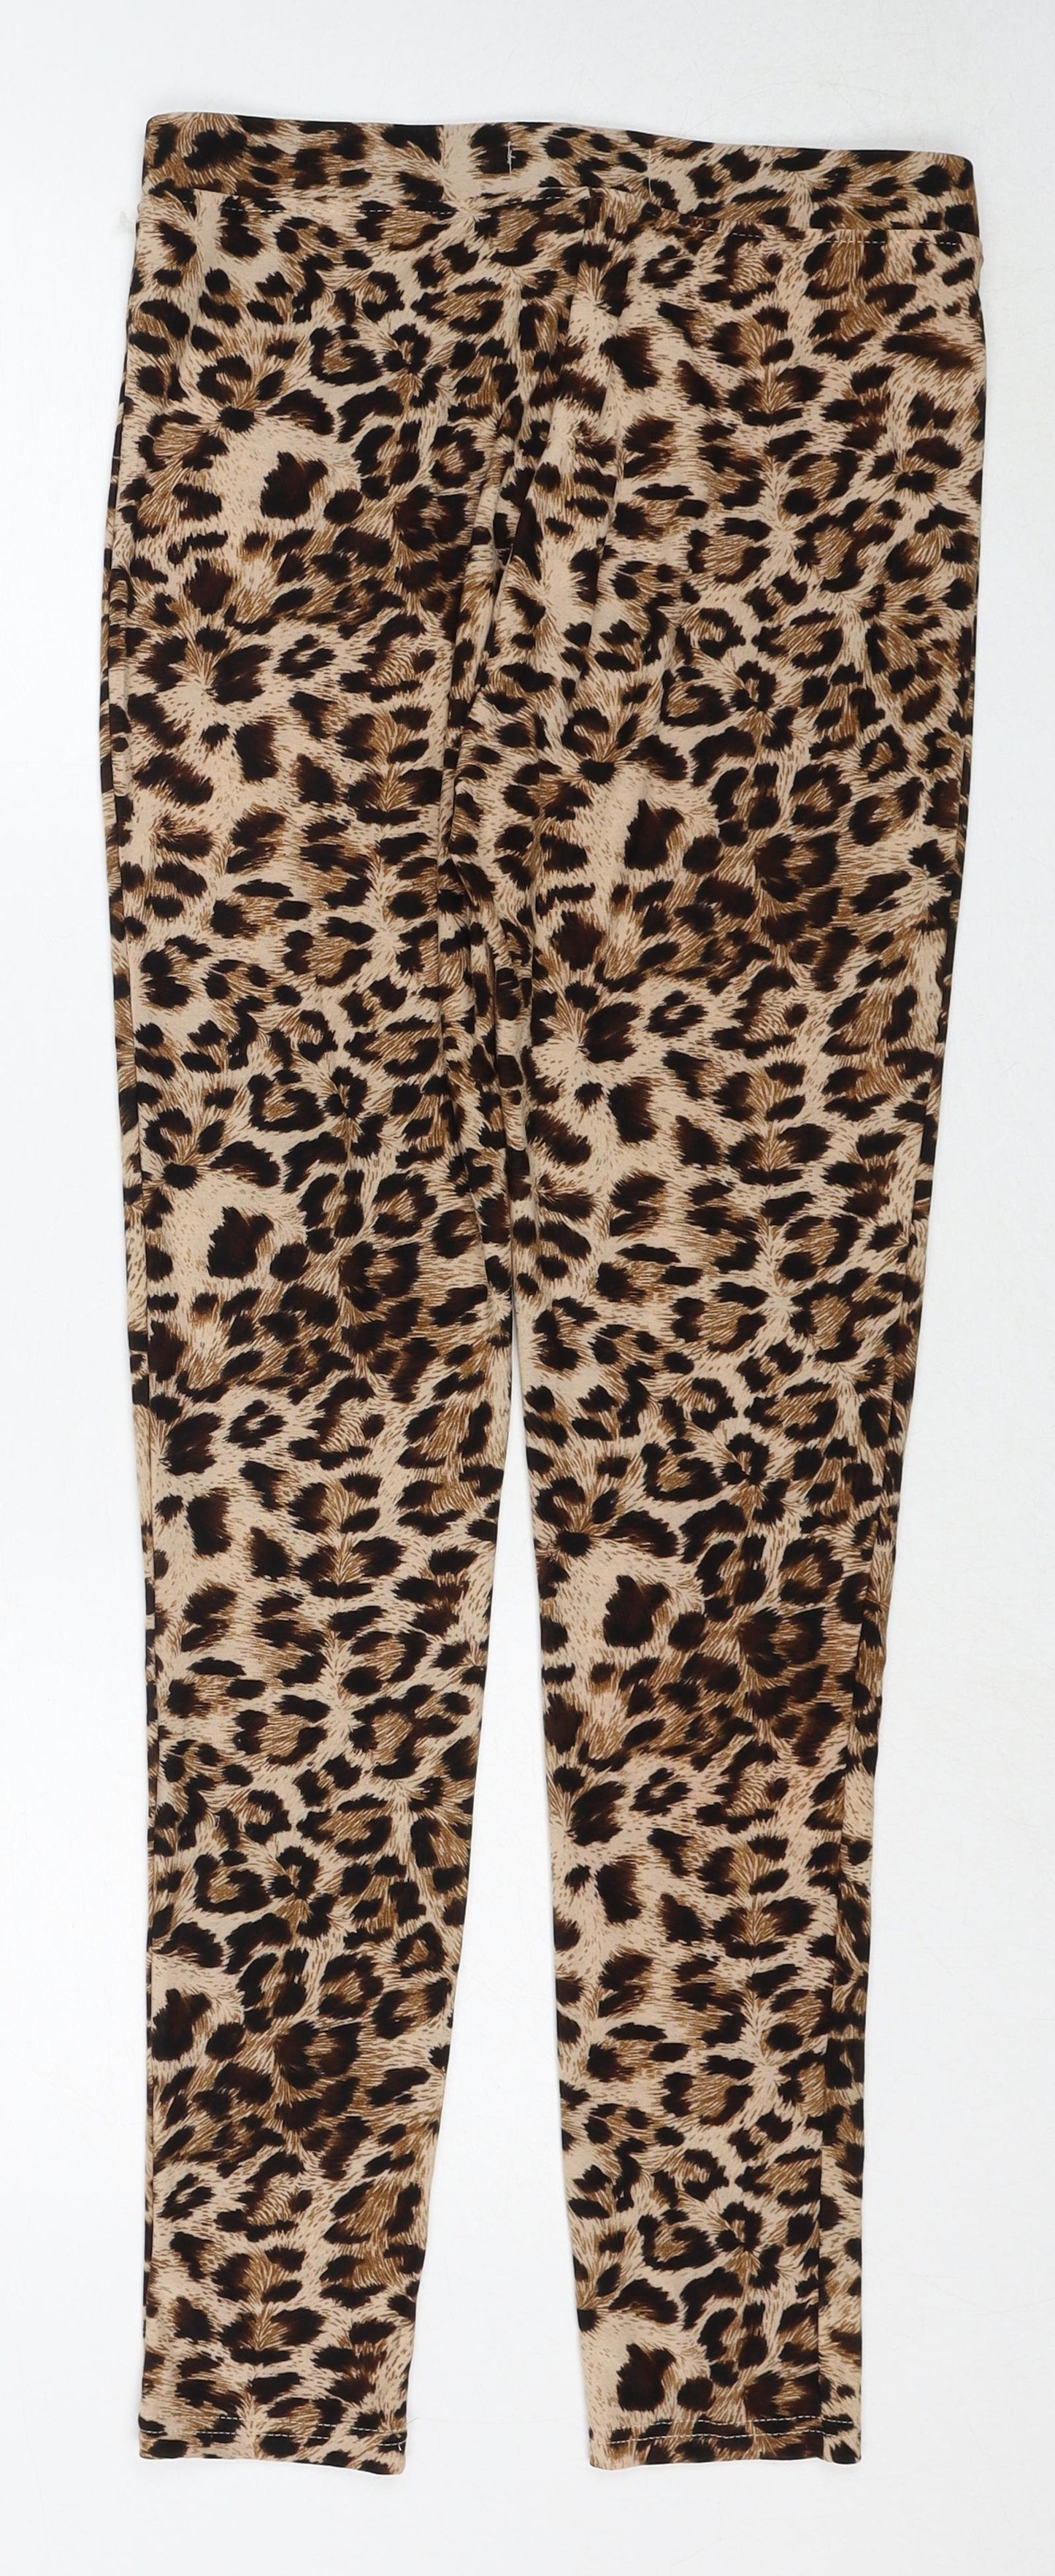 PARISIAN SIGNATURE Womens Brown Animal Print Polyester Capri Leggings Size S - Leopard Print